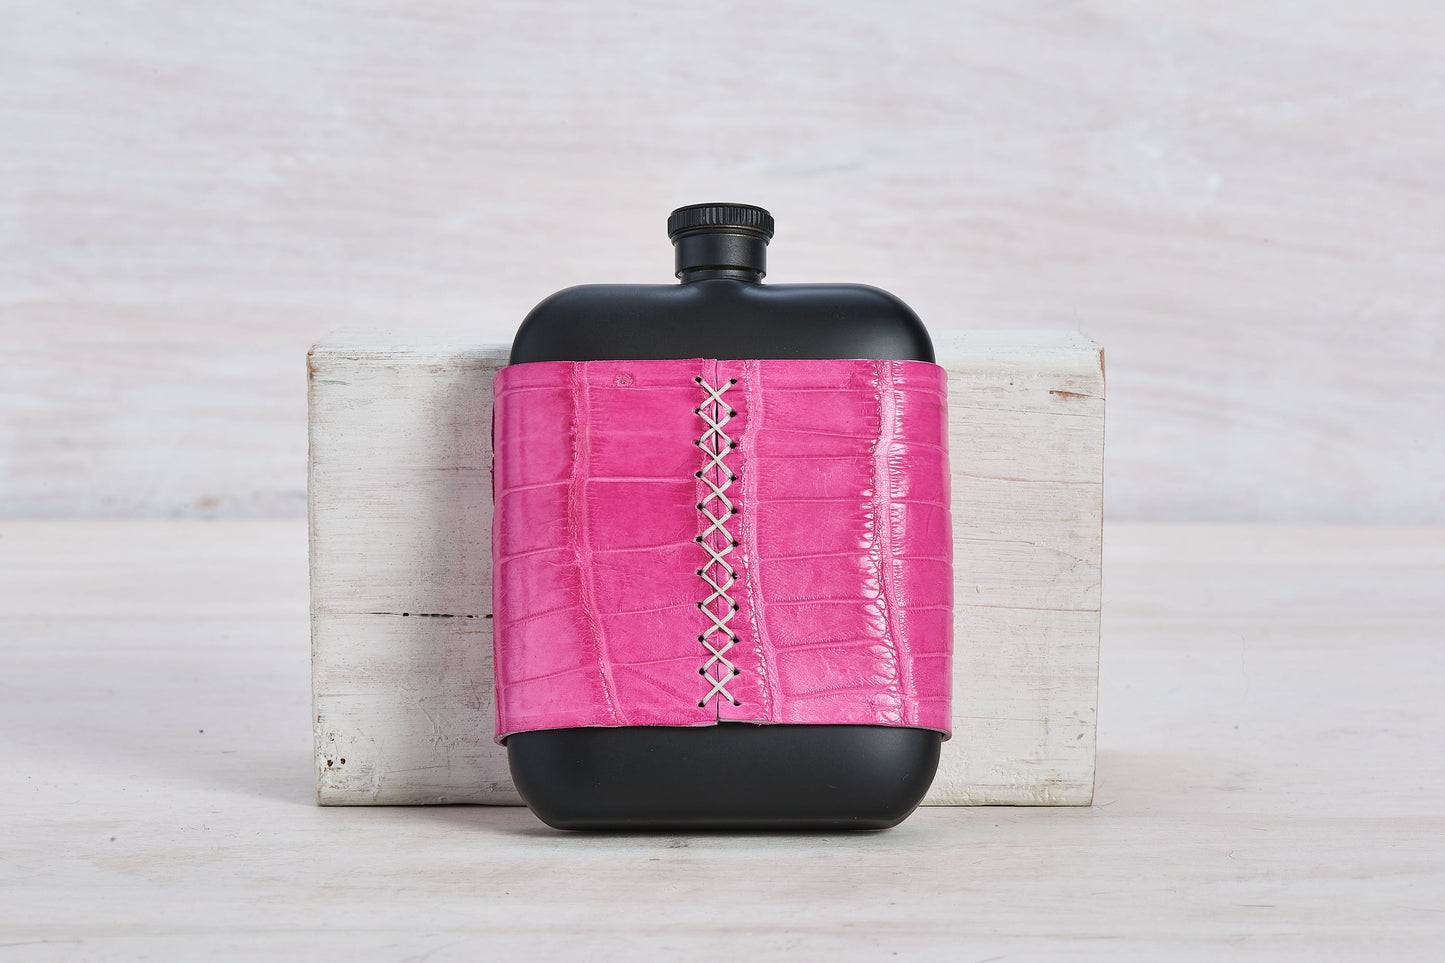 Hot Pink Croc Skin Flask - back with cross stitch